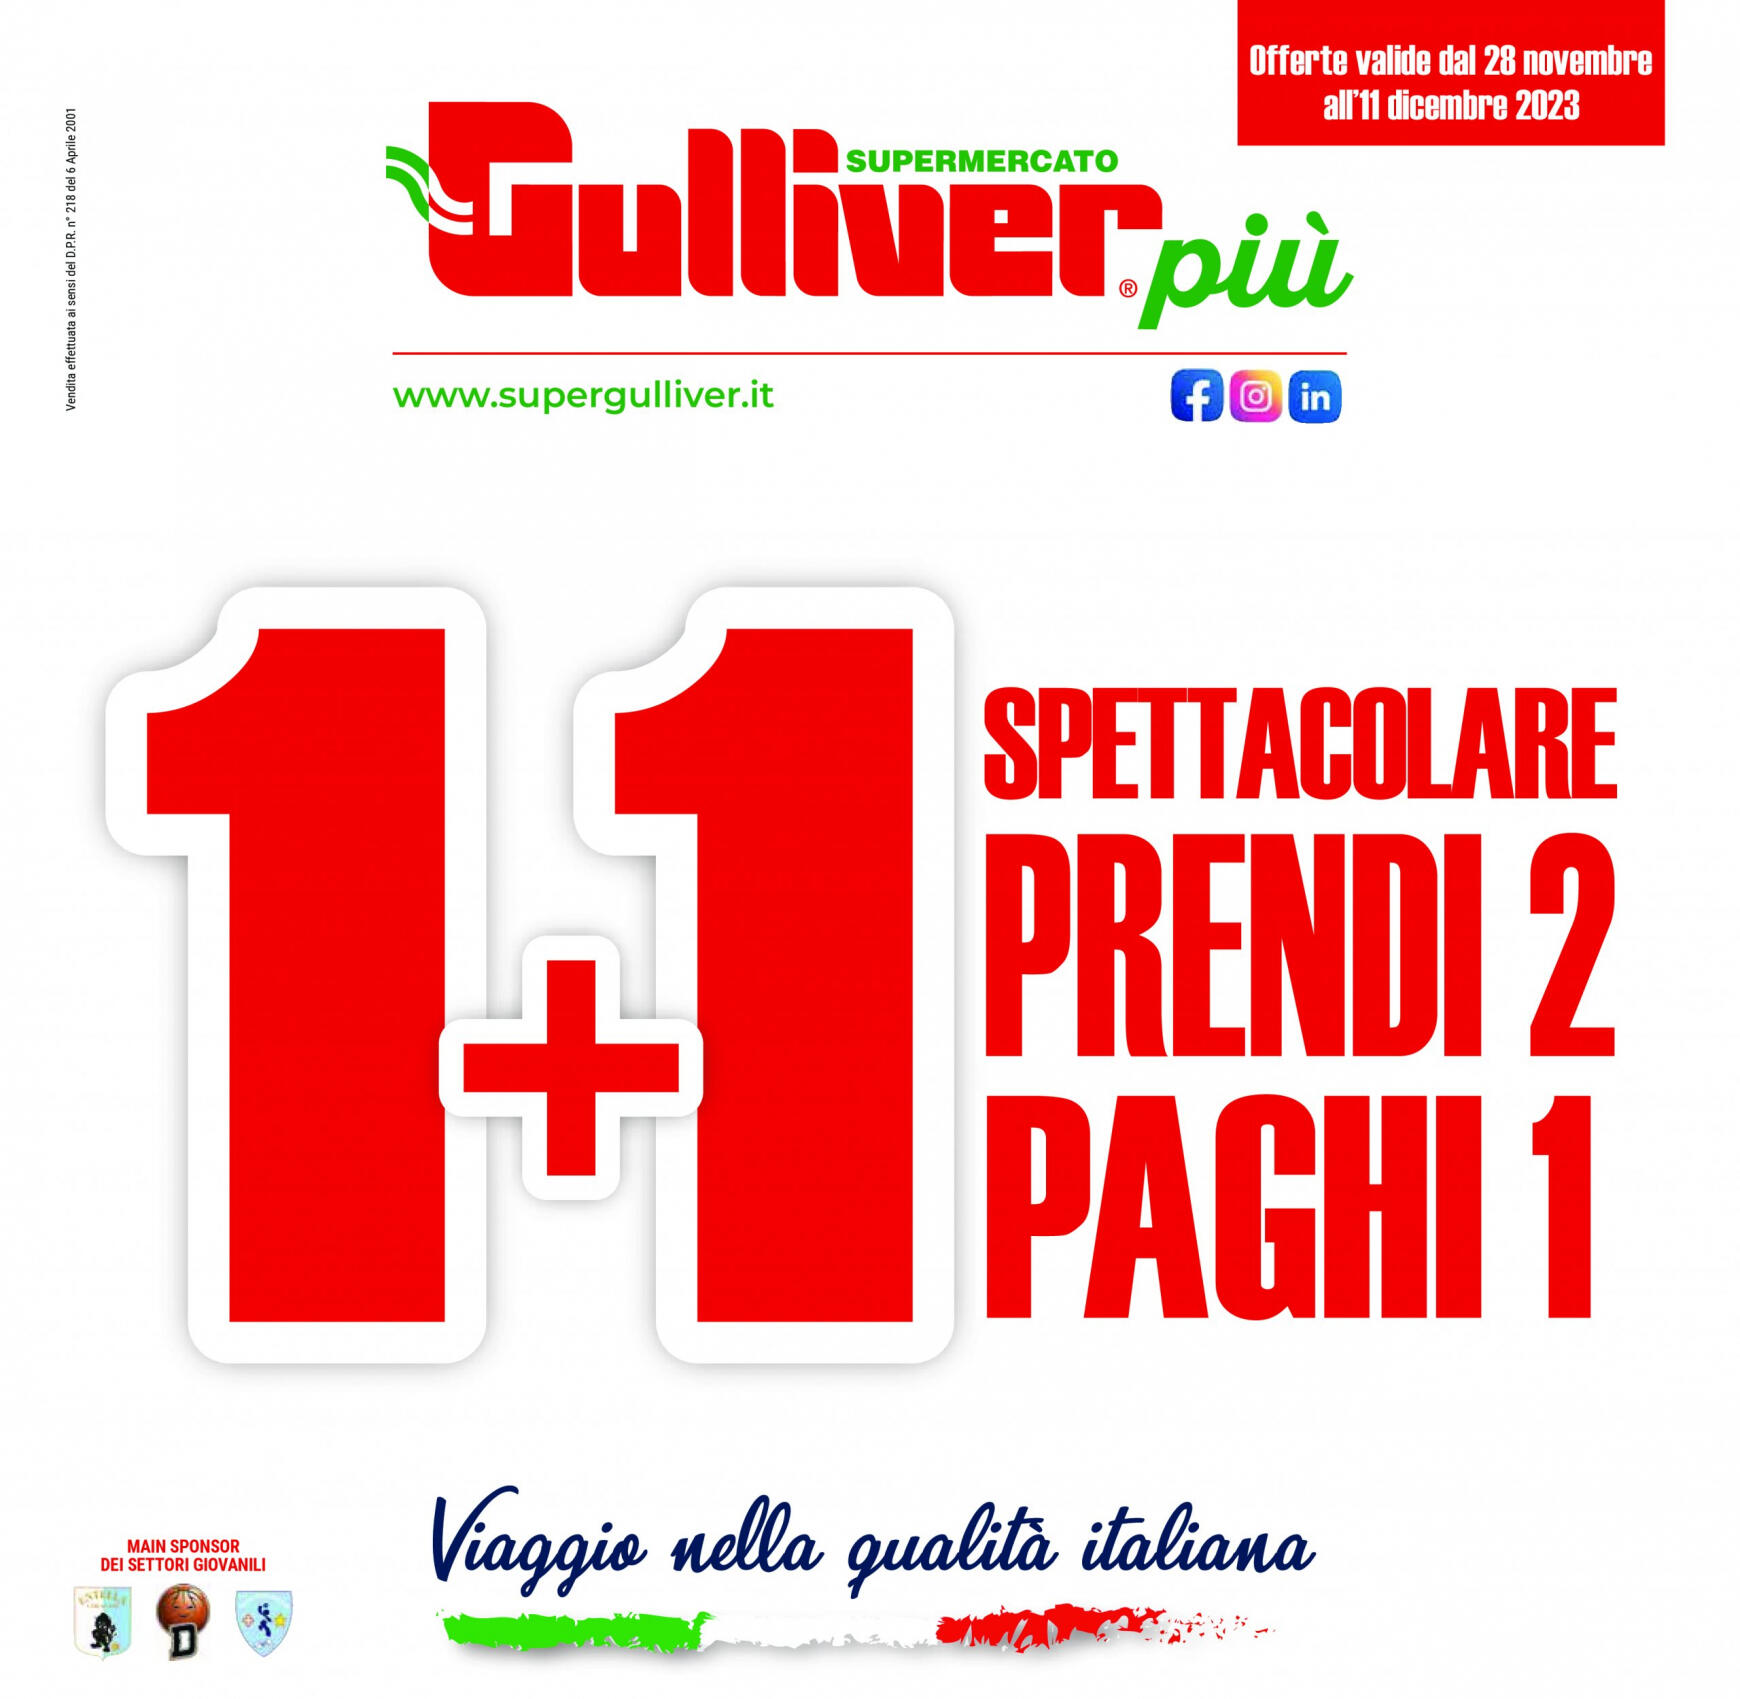 gulliver - Gulliver - Promozioni Supermercati GulliverPiù valido da 28.11.2023 - page: 1